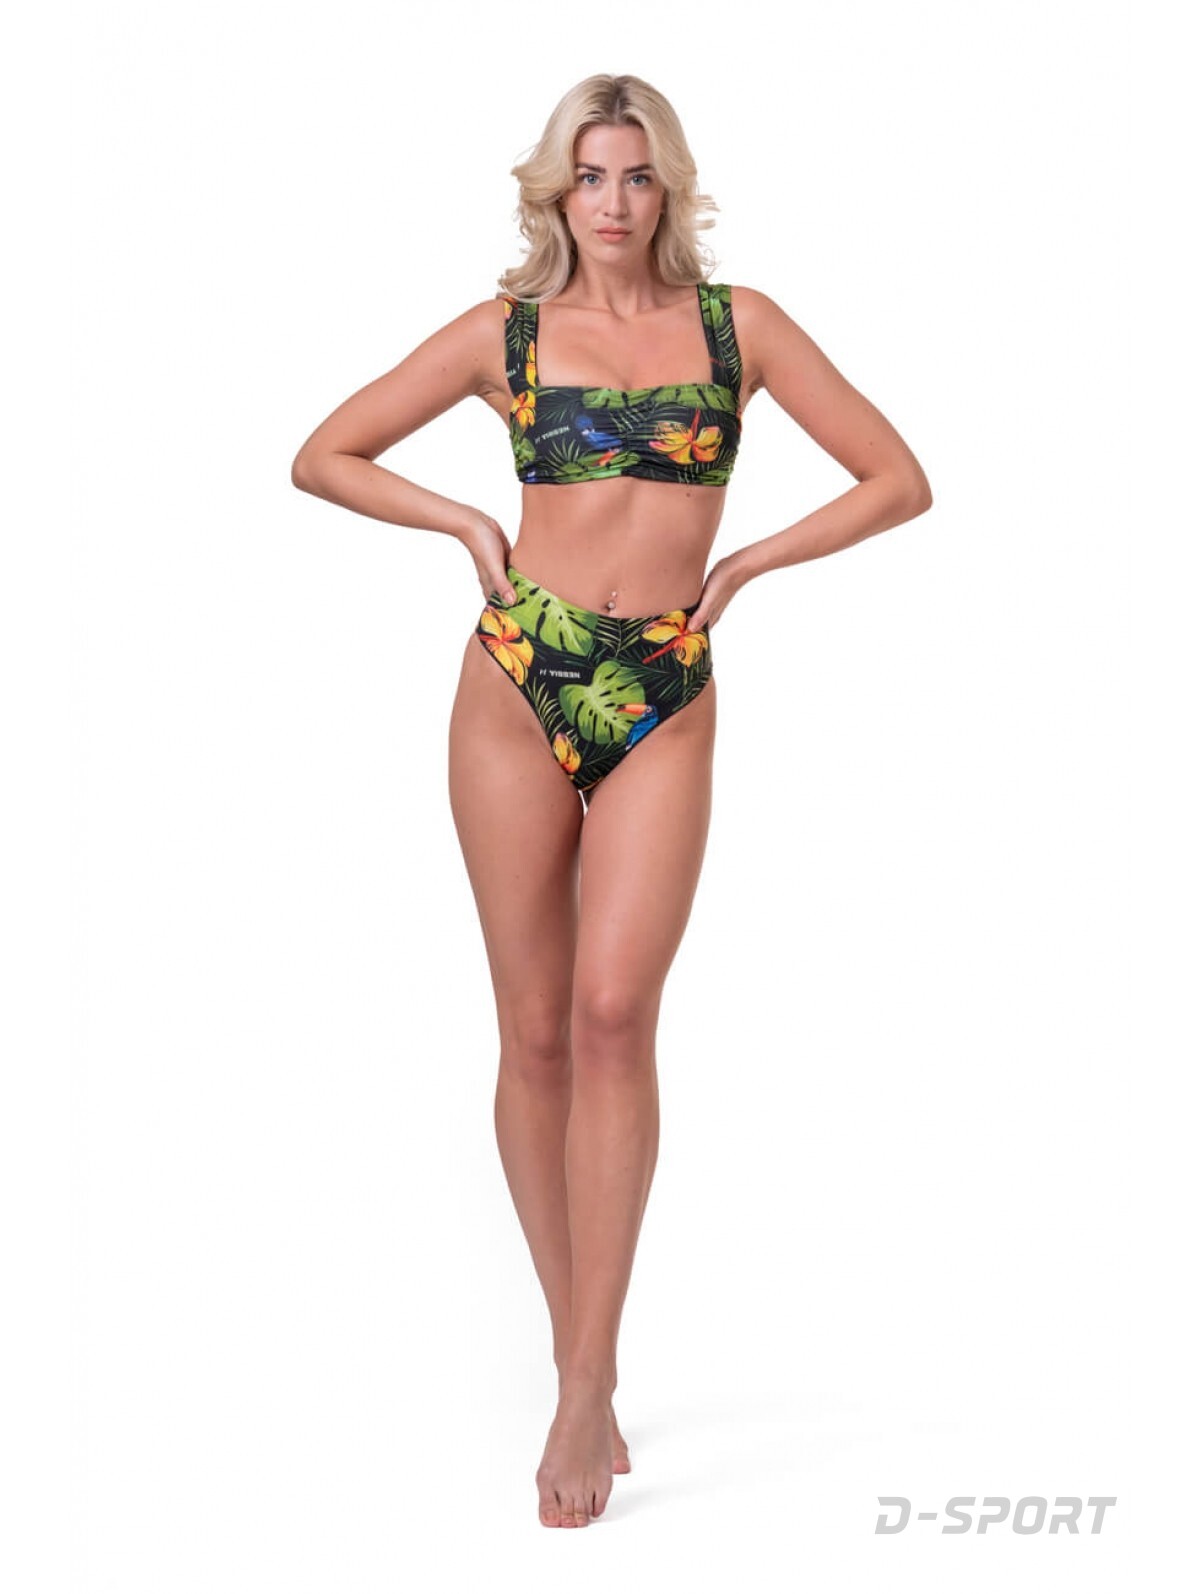 NEBBIA Earth Powered bikini - top